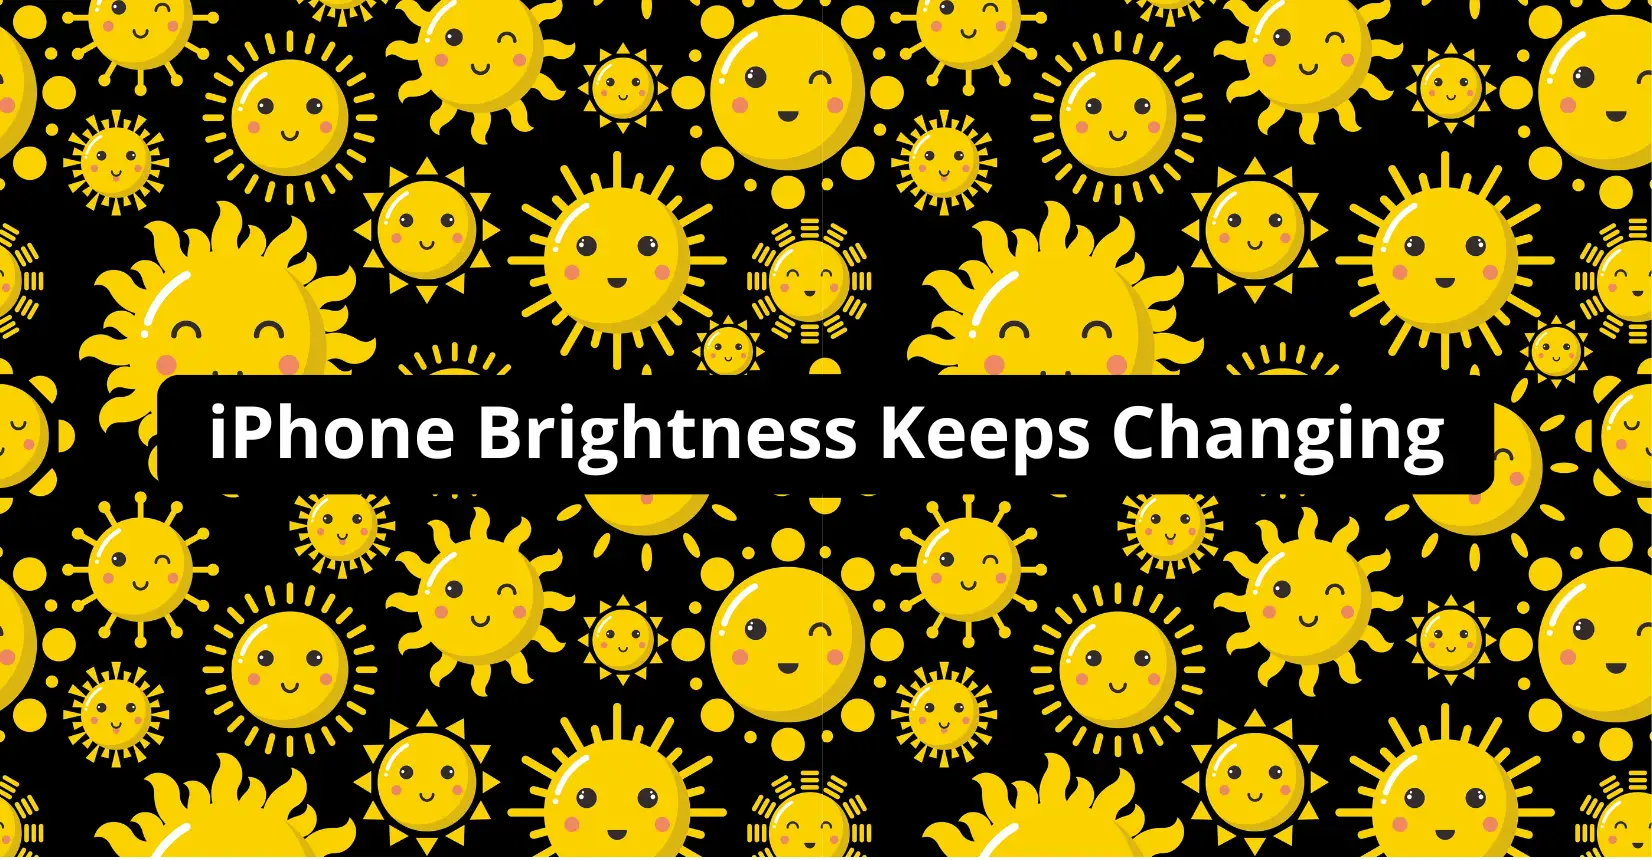 iPhone Brightness Keeps Changing